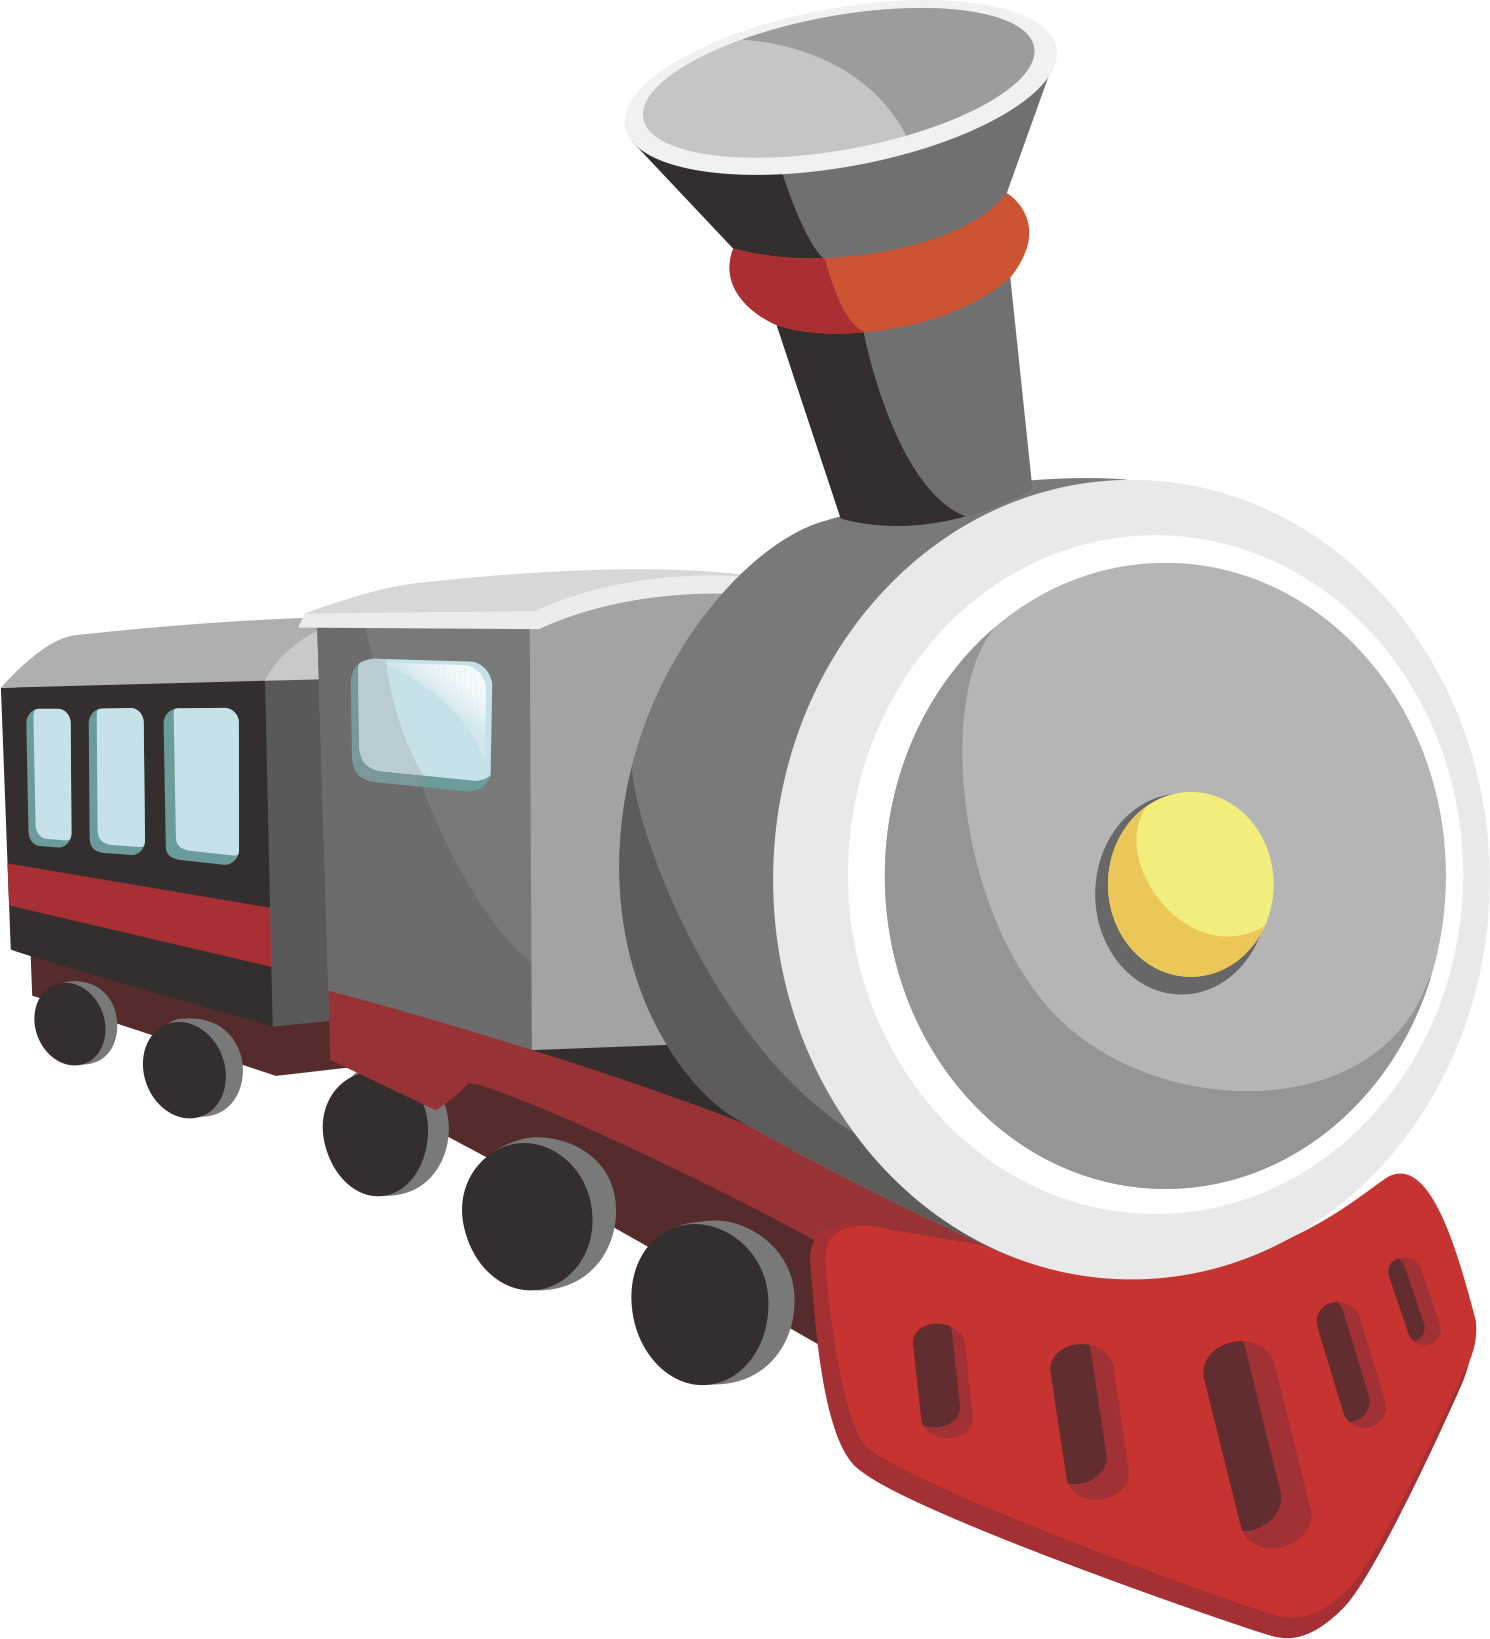 Train Cartoon - Train png vector material png download - 1490*1639